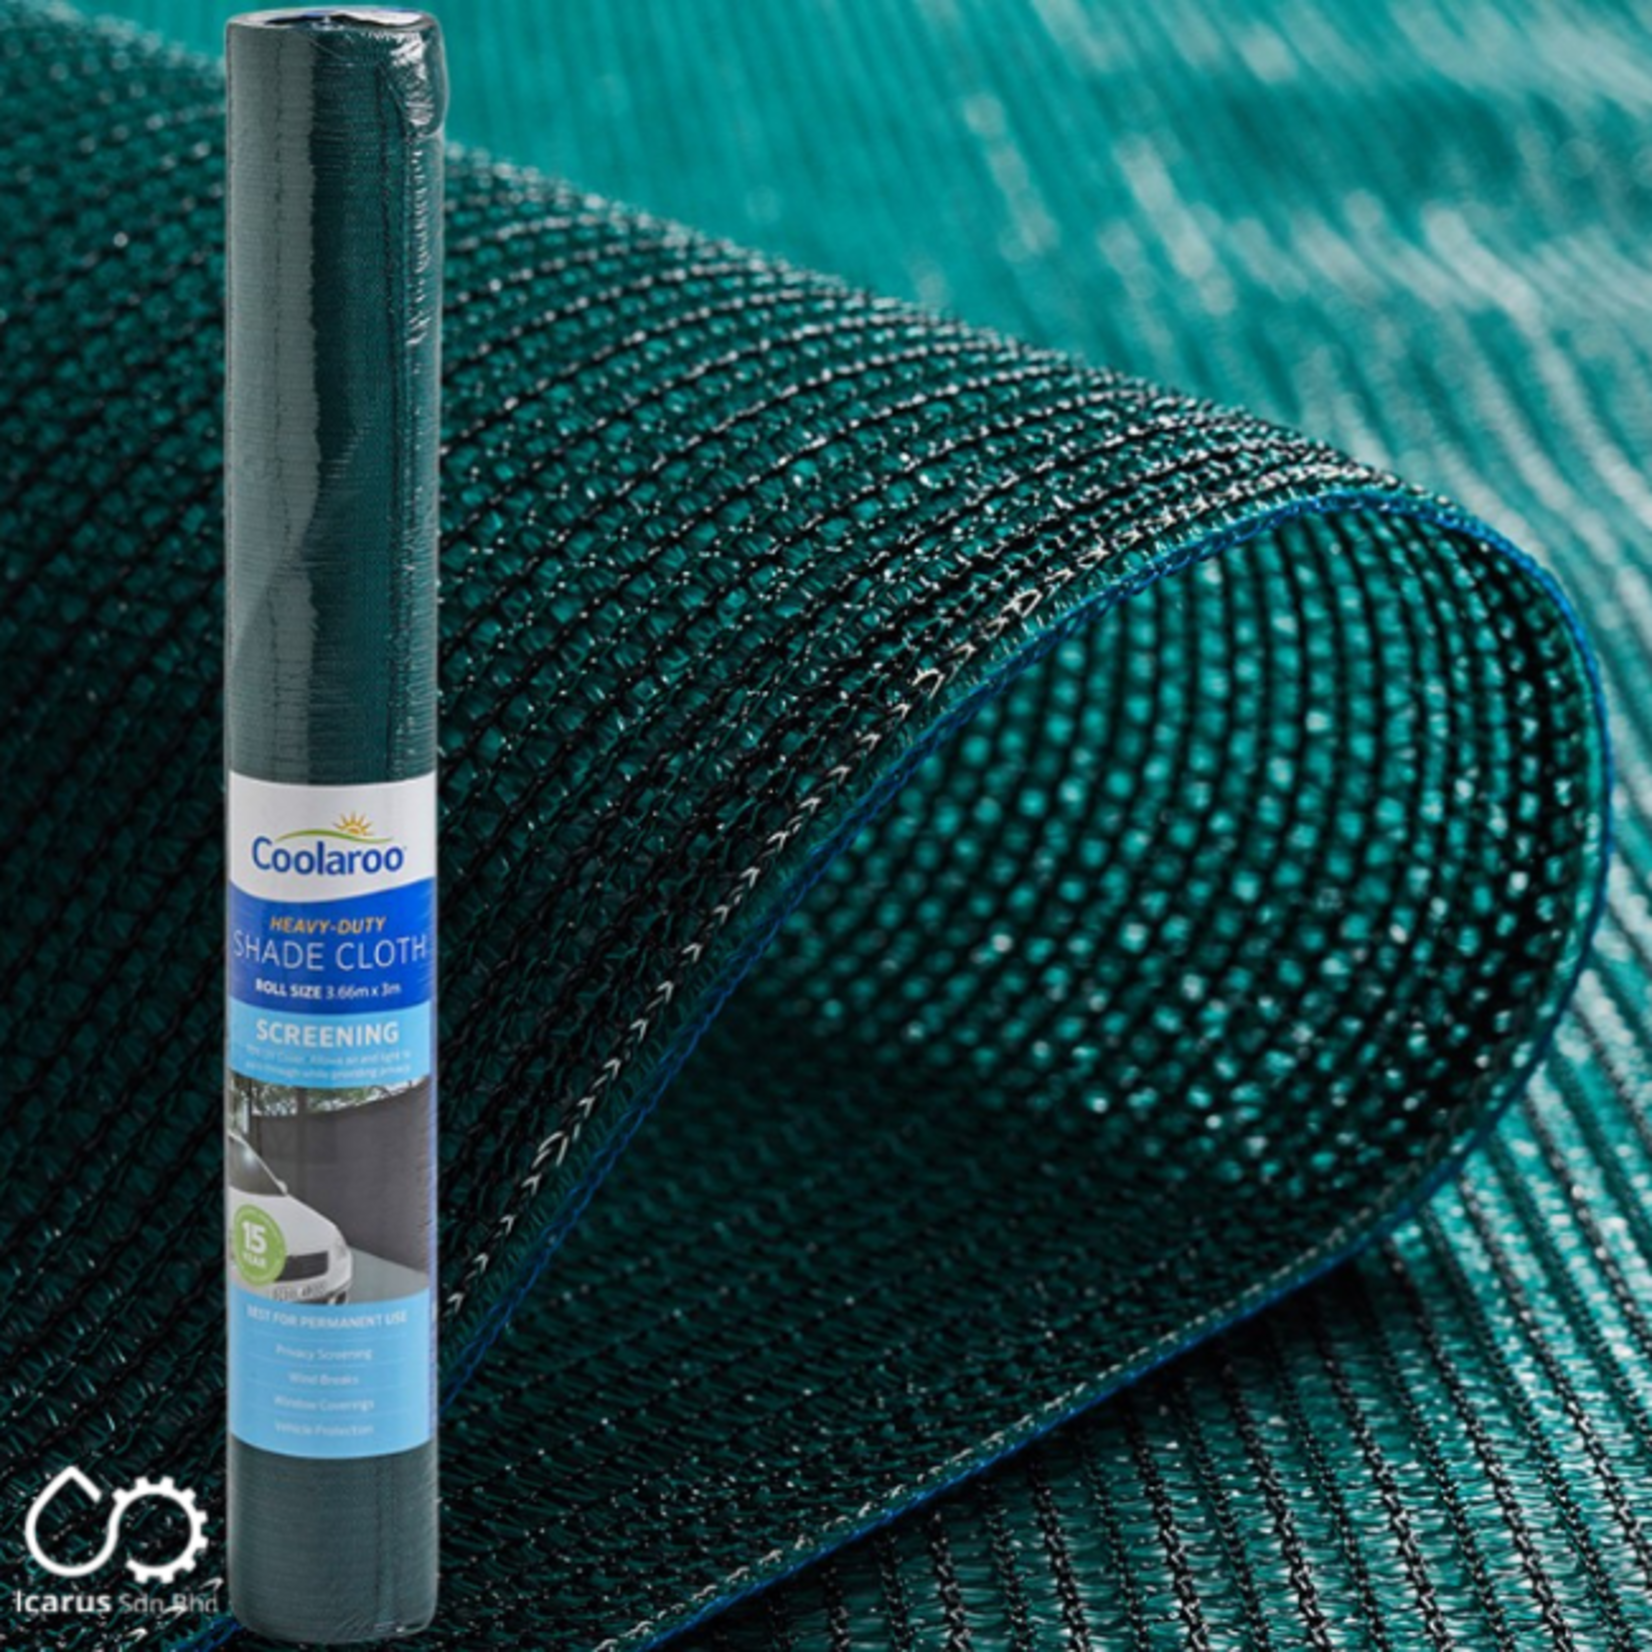 Coolaroo 1.83 x 3 m Shade Cloth, 70% UV Protection, Color Rain Forest